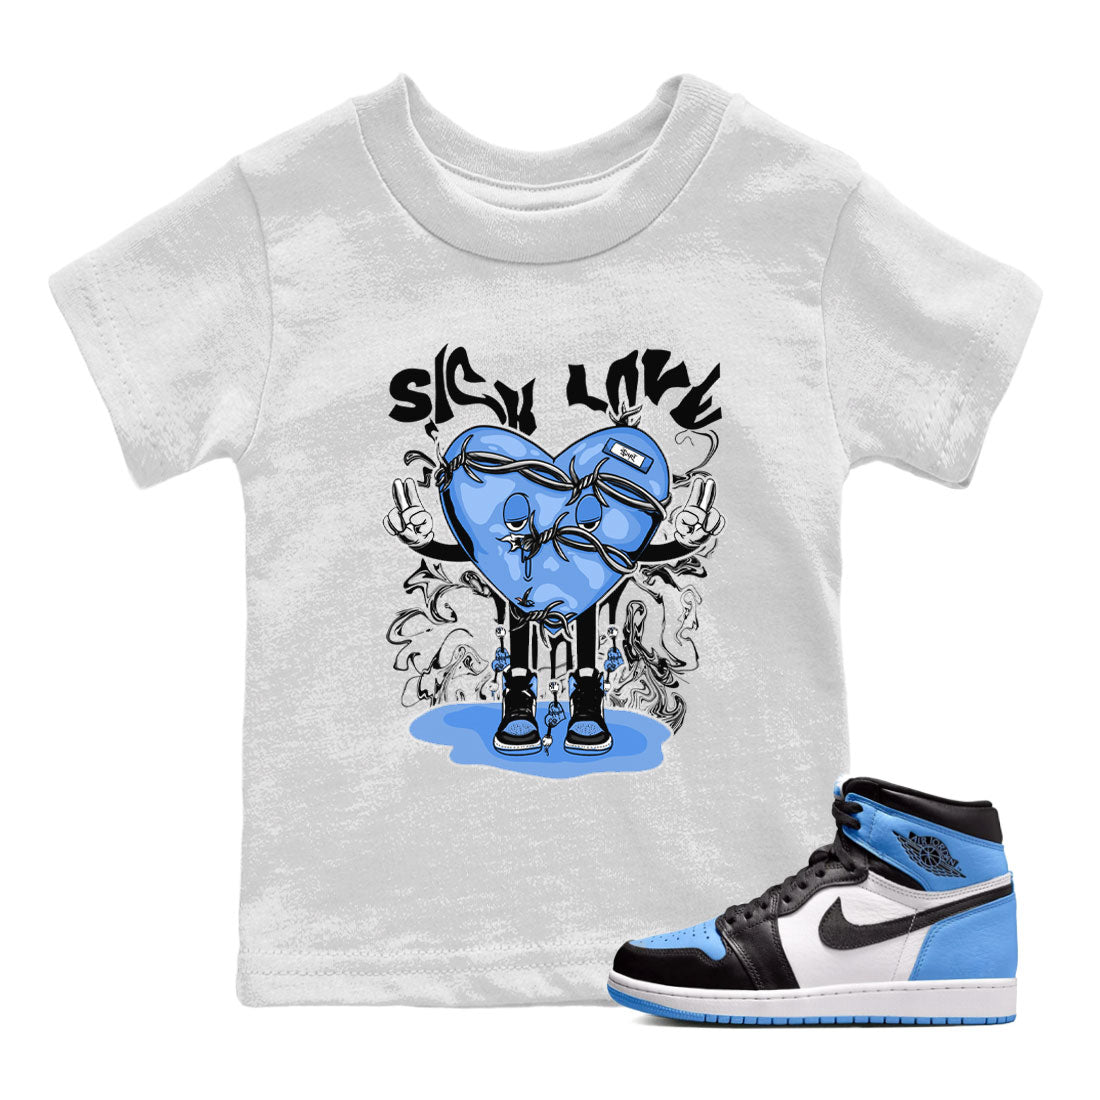 Air Jordan 1 UNC Toe shirt to match jordans Sick Love Streetwear Sneaker Shirt Air Jordan 1 Retro High OG UNC Toe Drip Gear Zone Sneaker Matching Clothing Baby Toddler White 1 T-Shirt